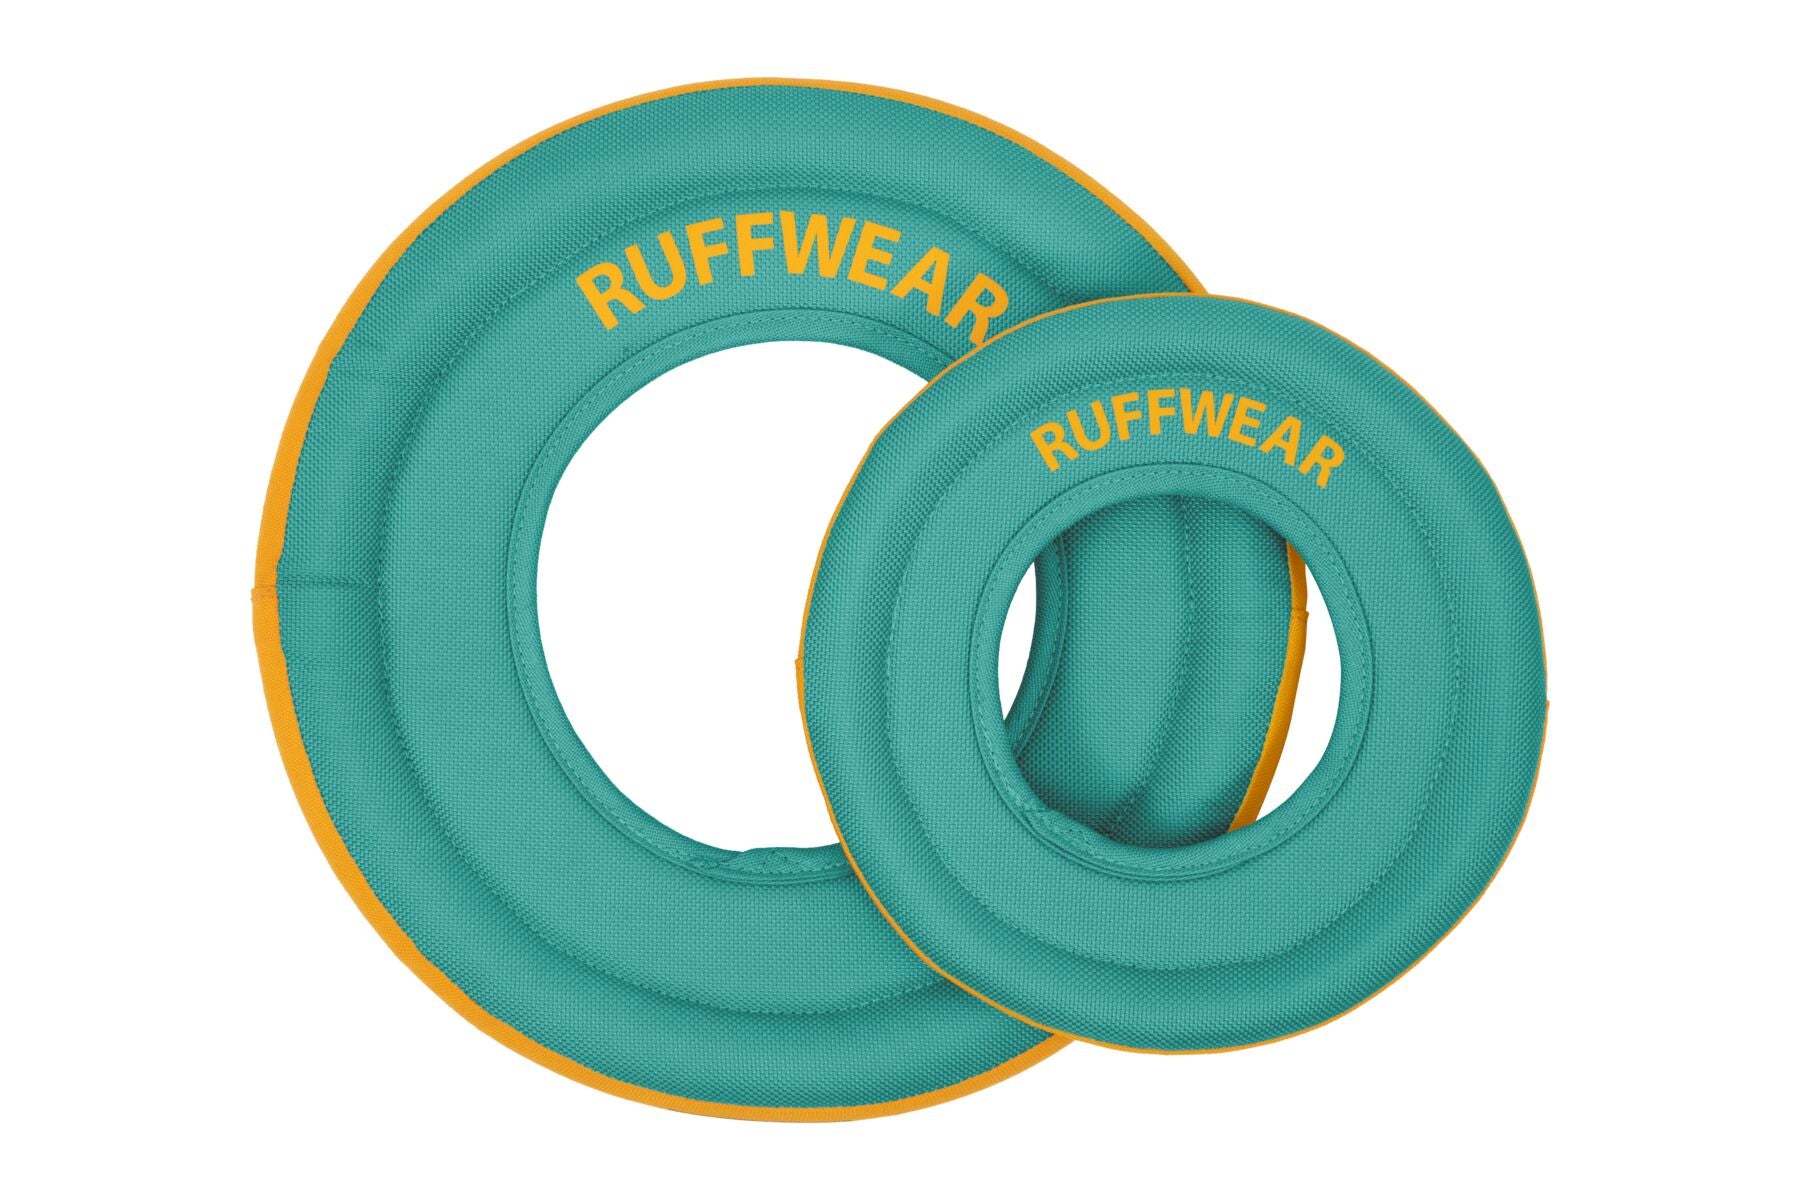 Ruffwear-Hydro-Plane-Aurora-Teal-Both